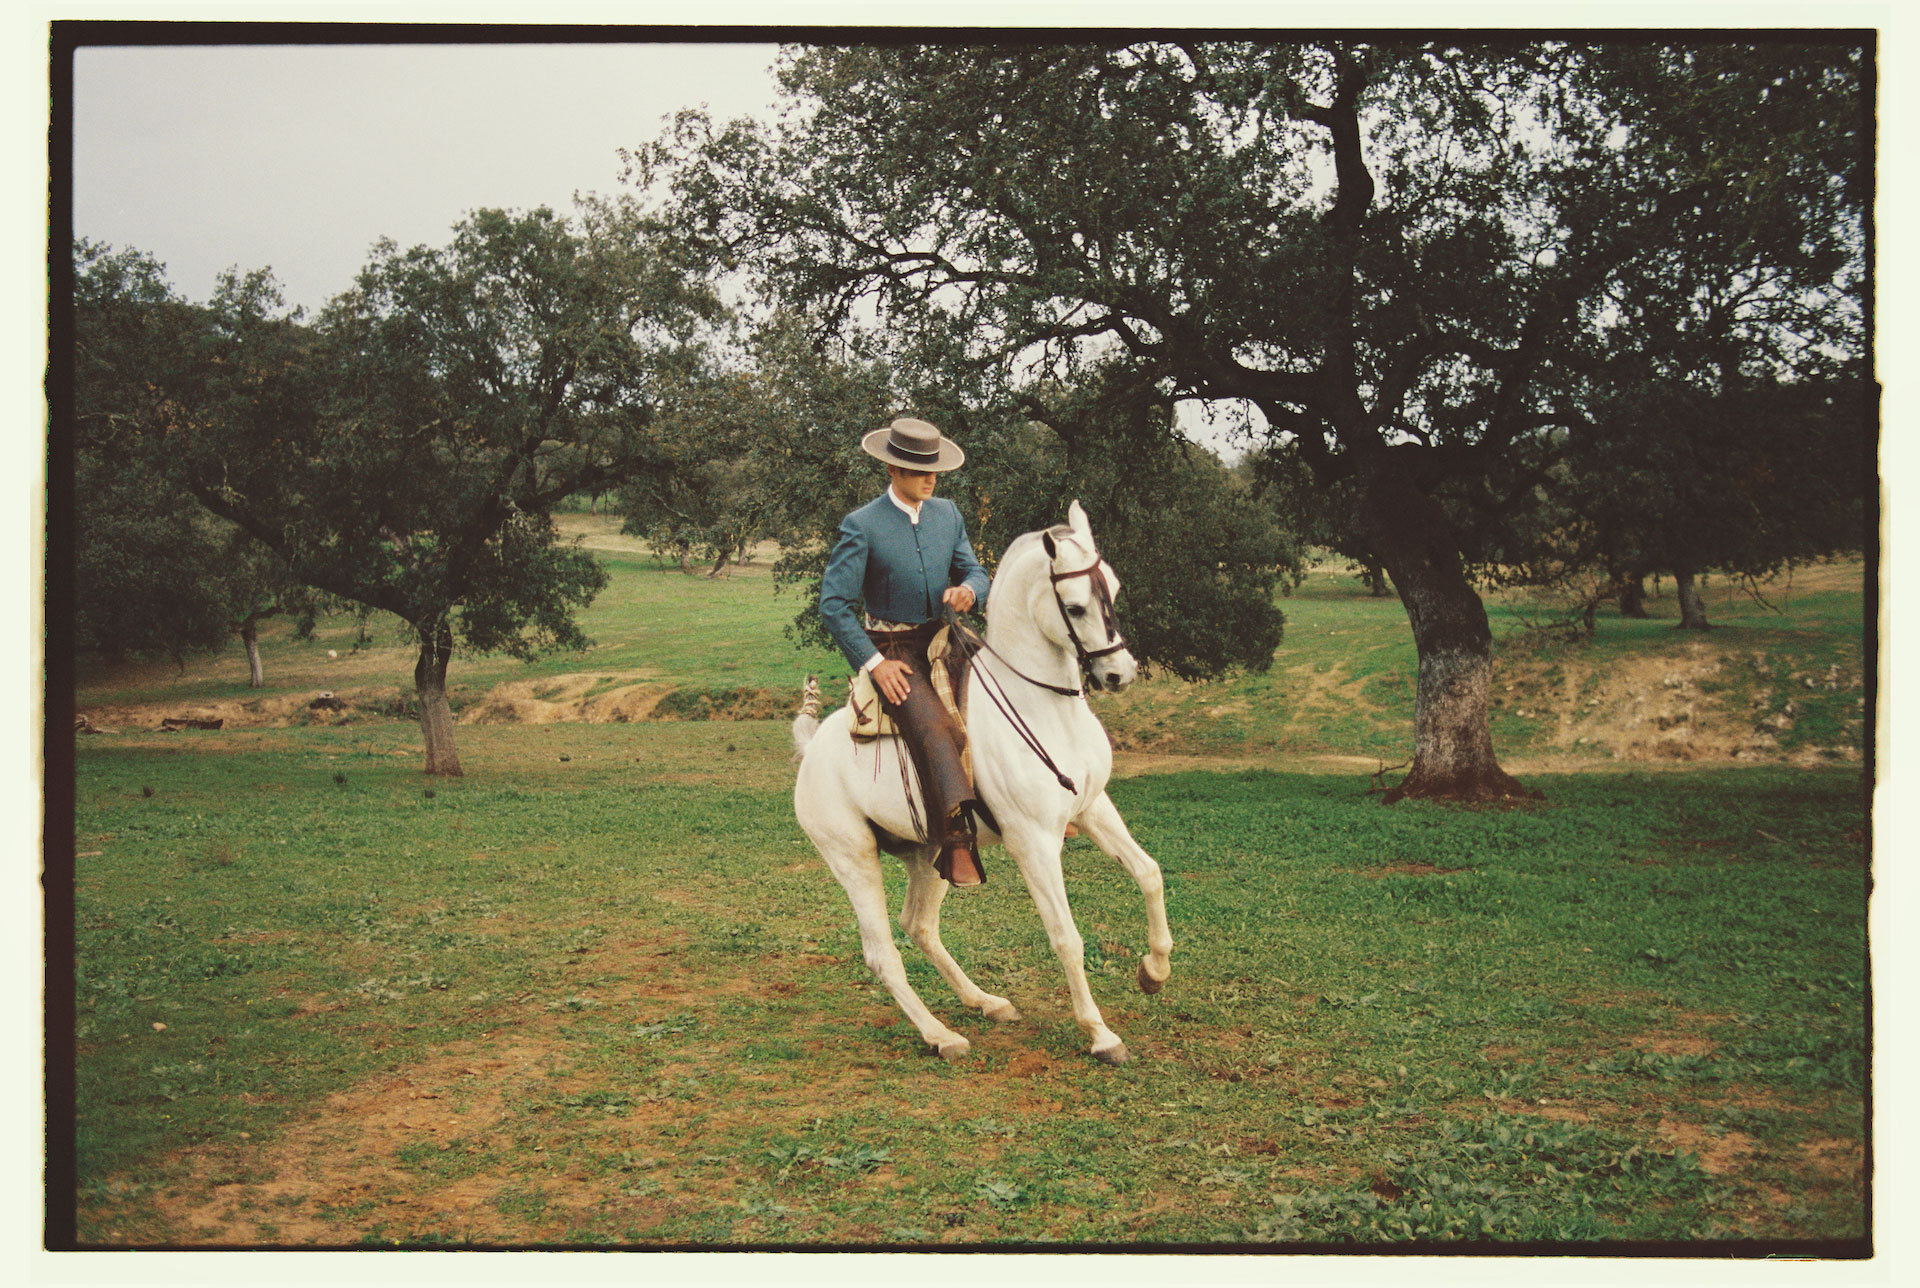 Man in blue jacket rides white horse